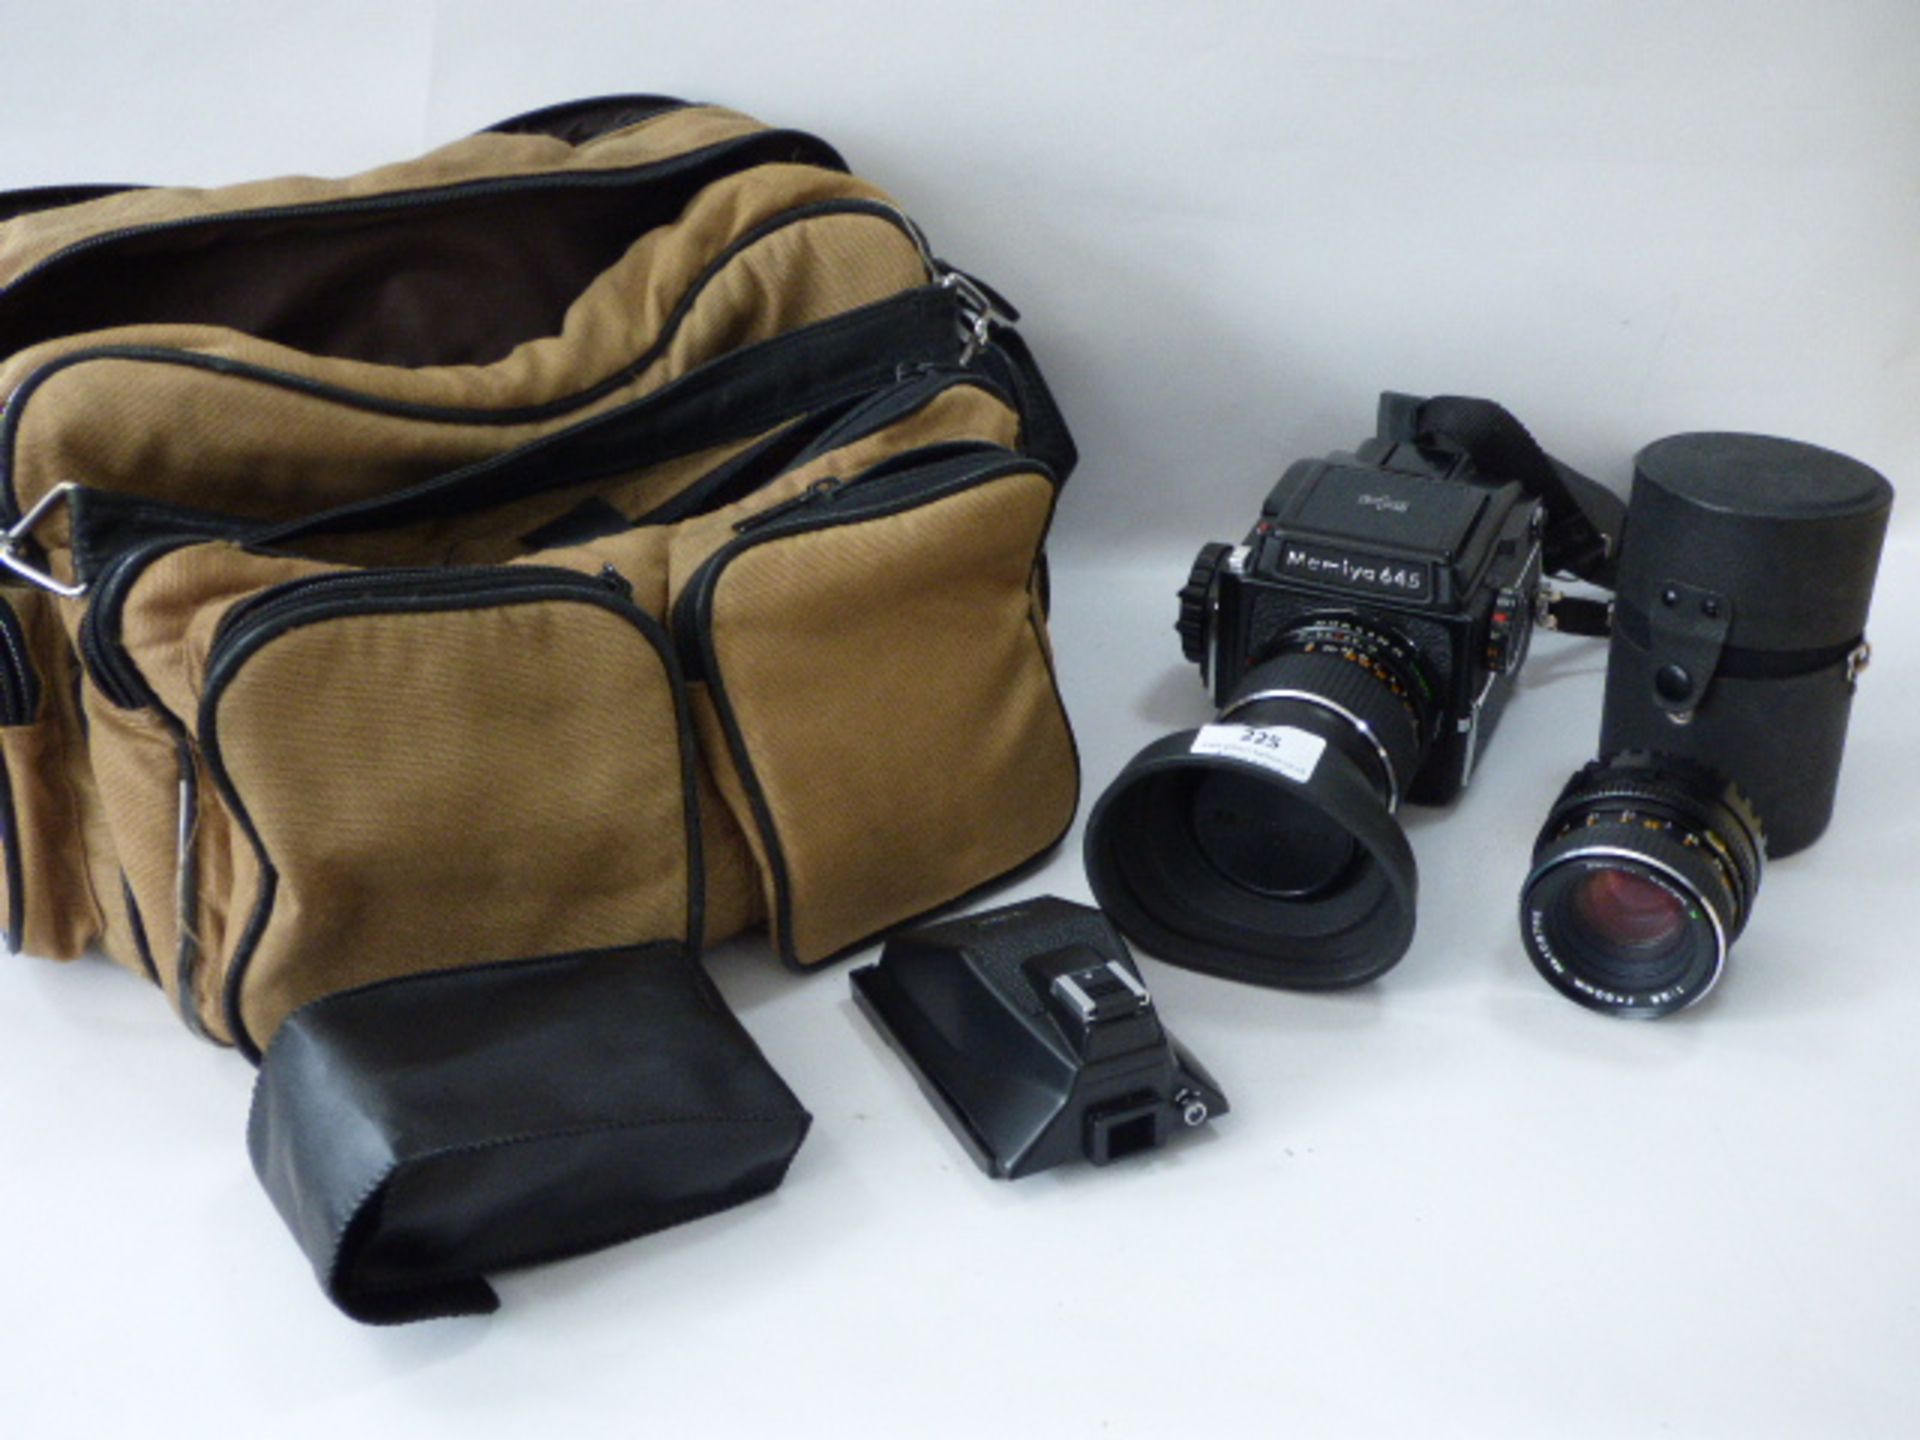 Mamiya 645 Camera with Lens, Bag, Etc